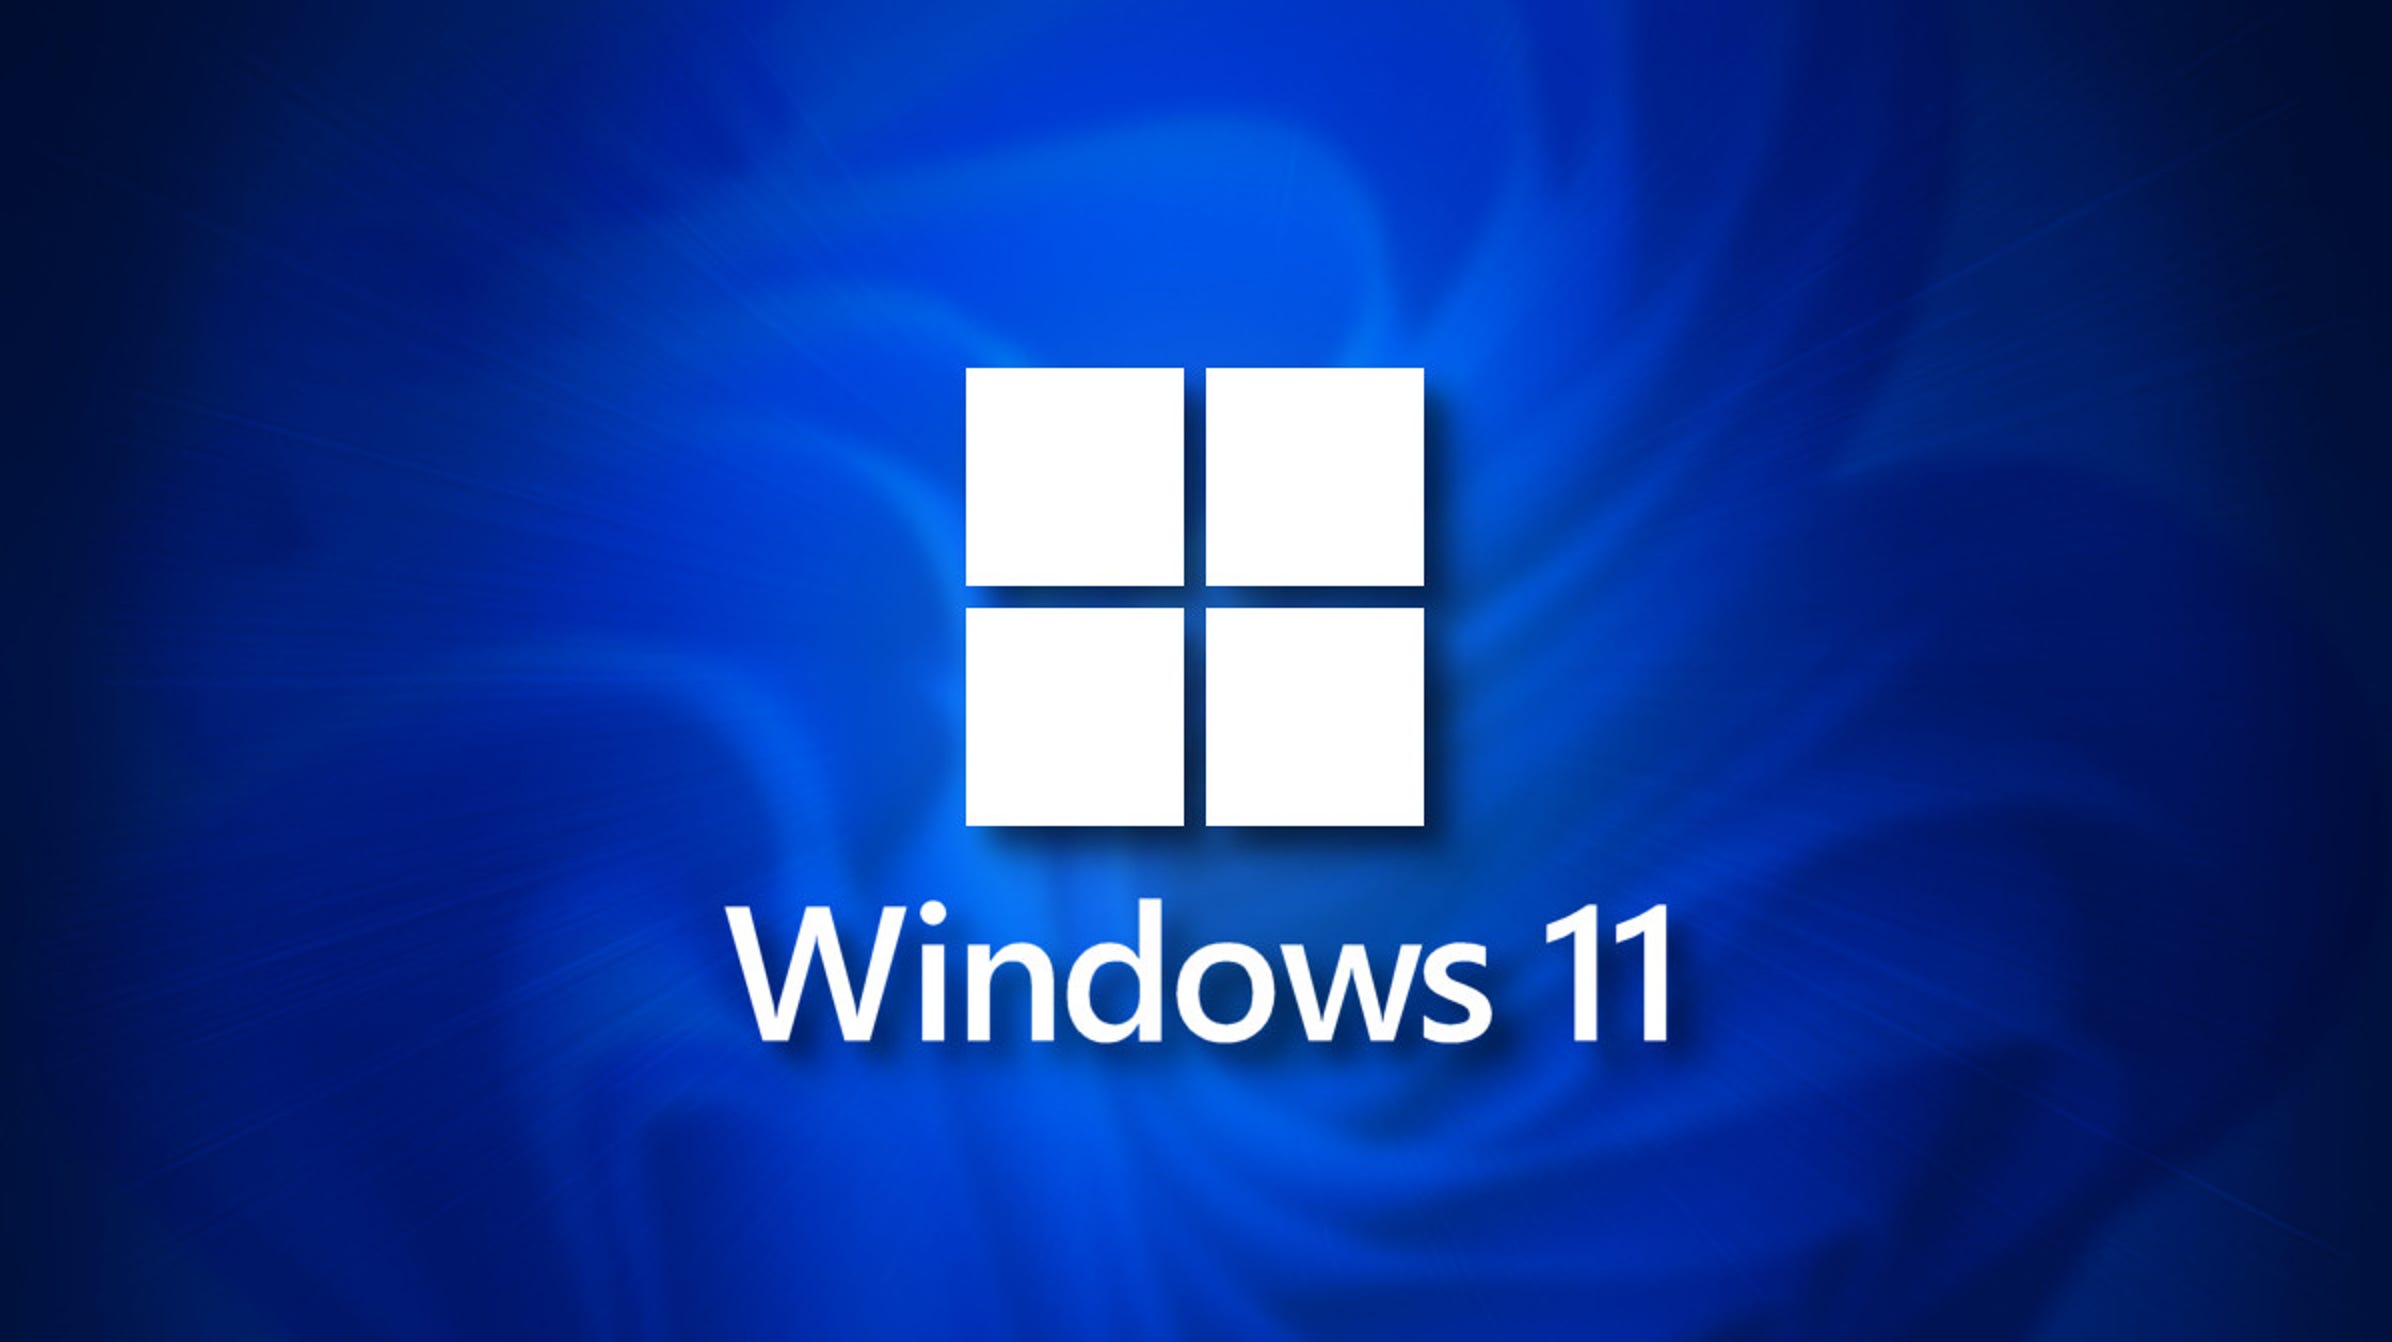 windows_11_basic_hero_dark-2583816-3917366-jpg-8479213